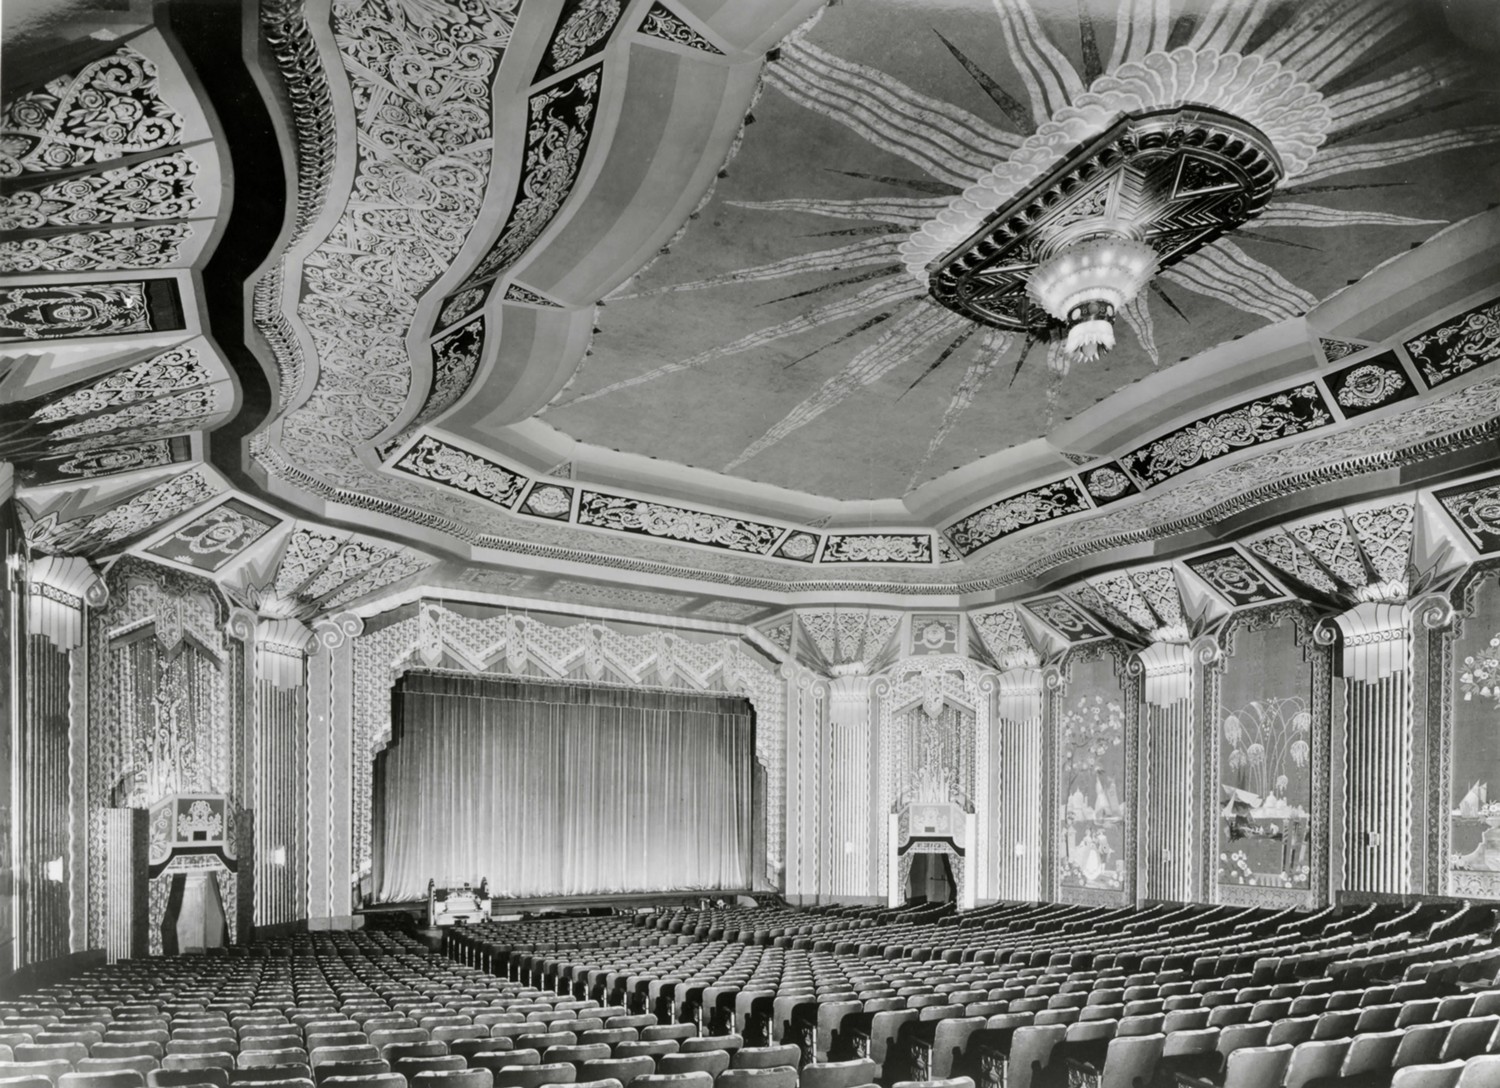 Paramount Theater, Aurora Illinois Auditorium from north-easterly corner toward stage area (1931)